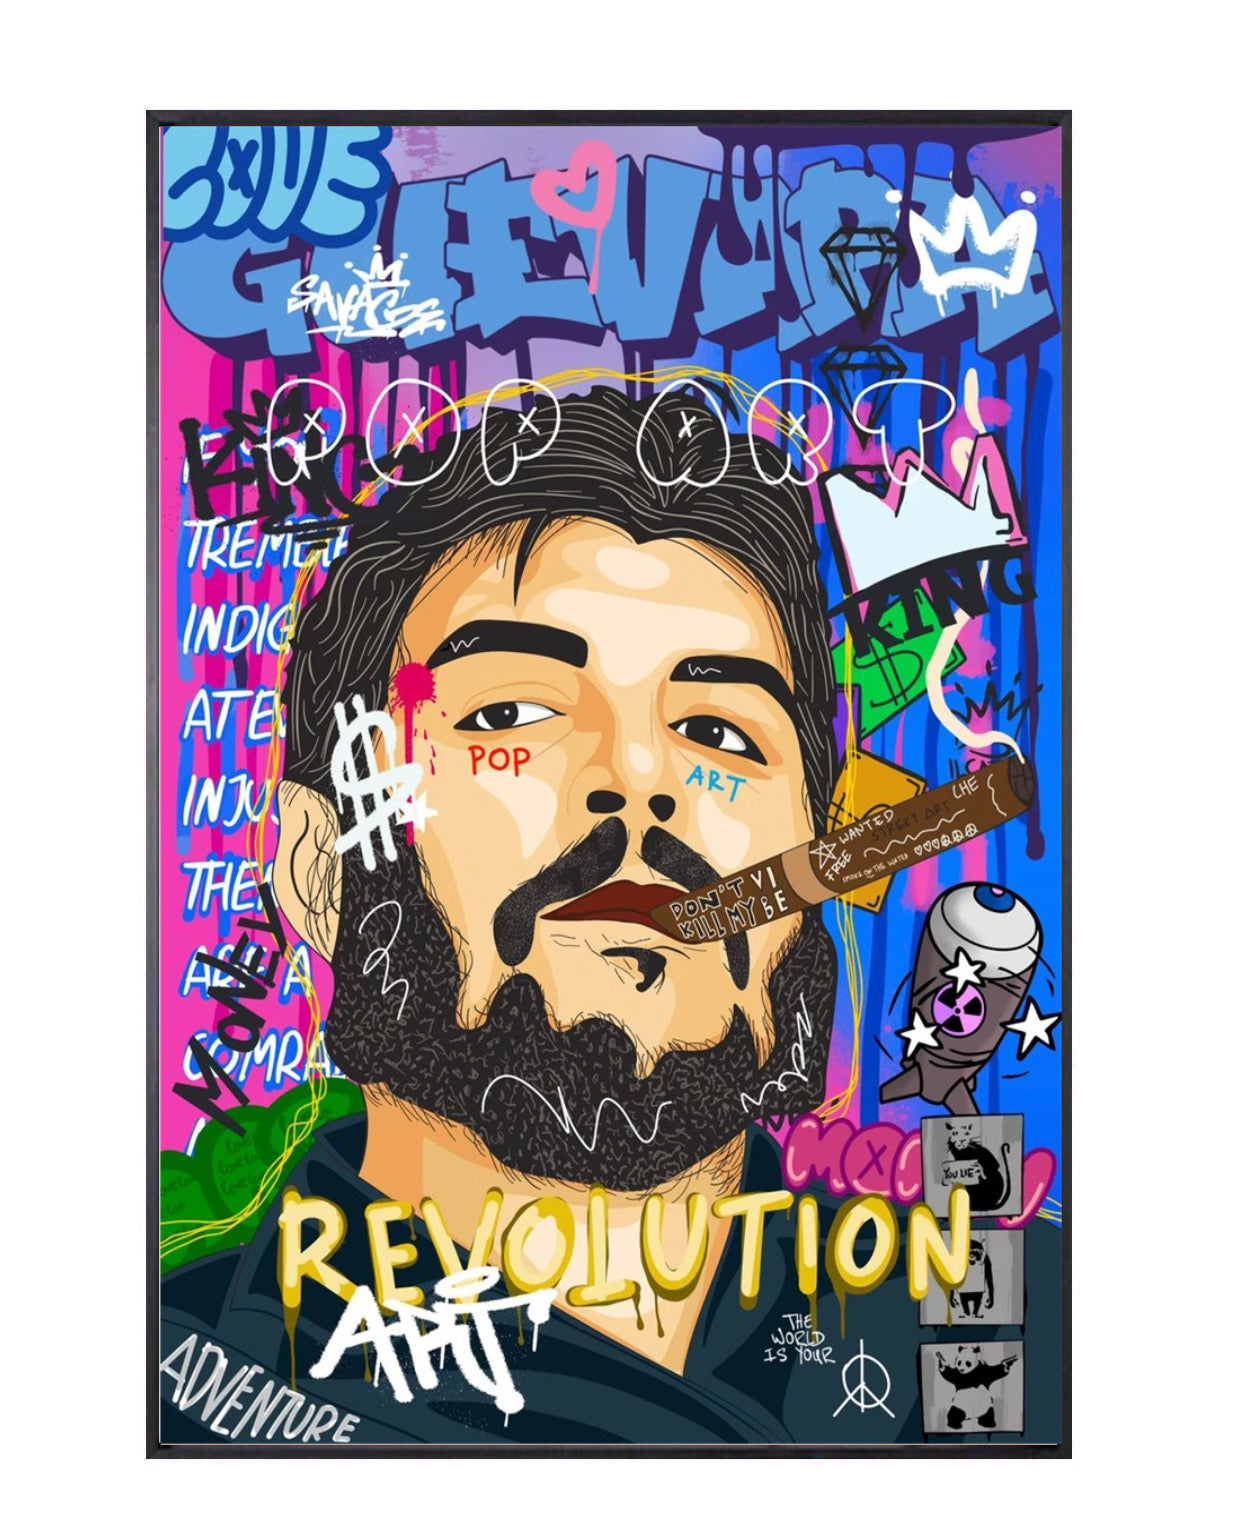 "revolution" modern graffiti poster